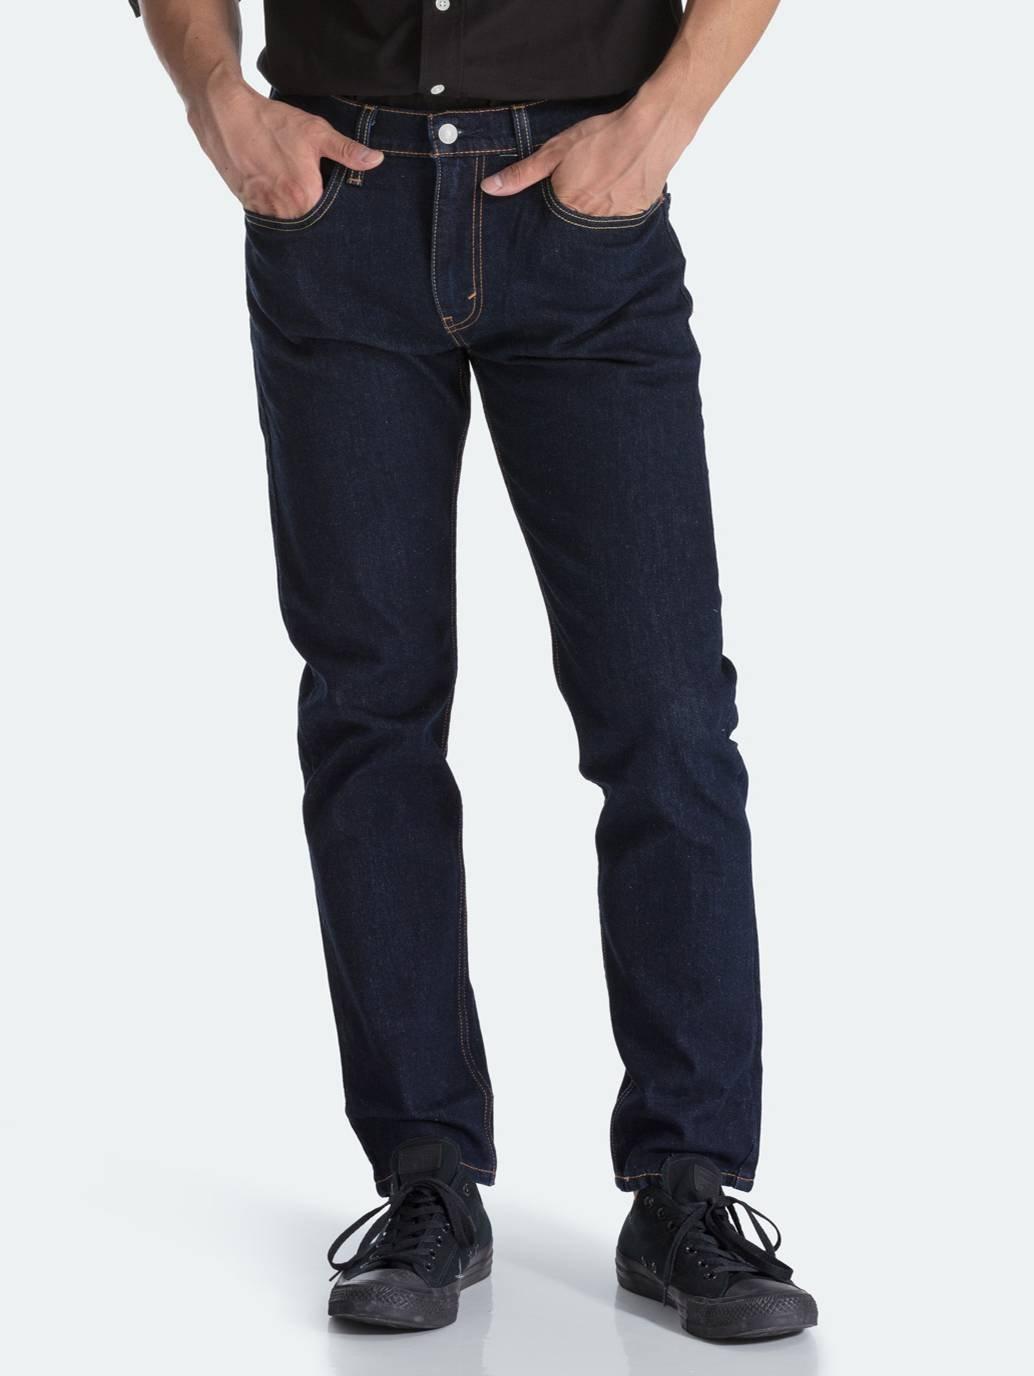 Descubrir 72+ imagen levi’s men’s 502 regular taper jeans